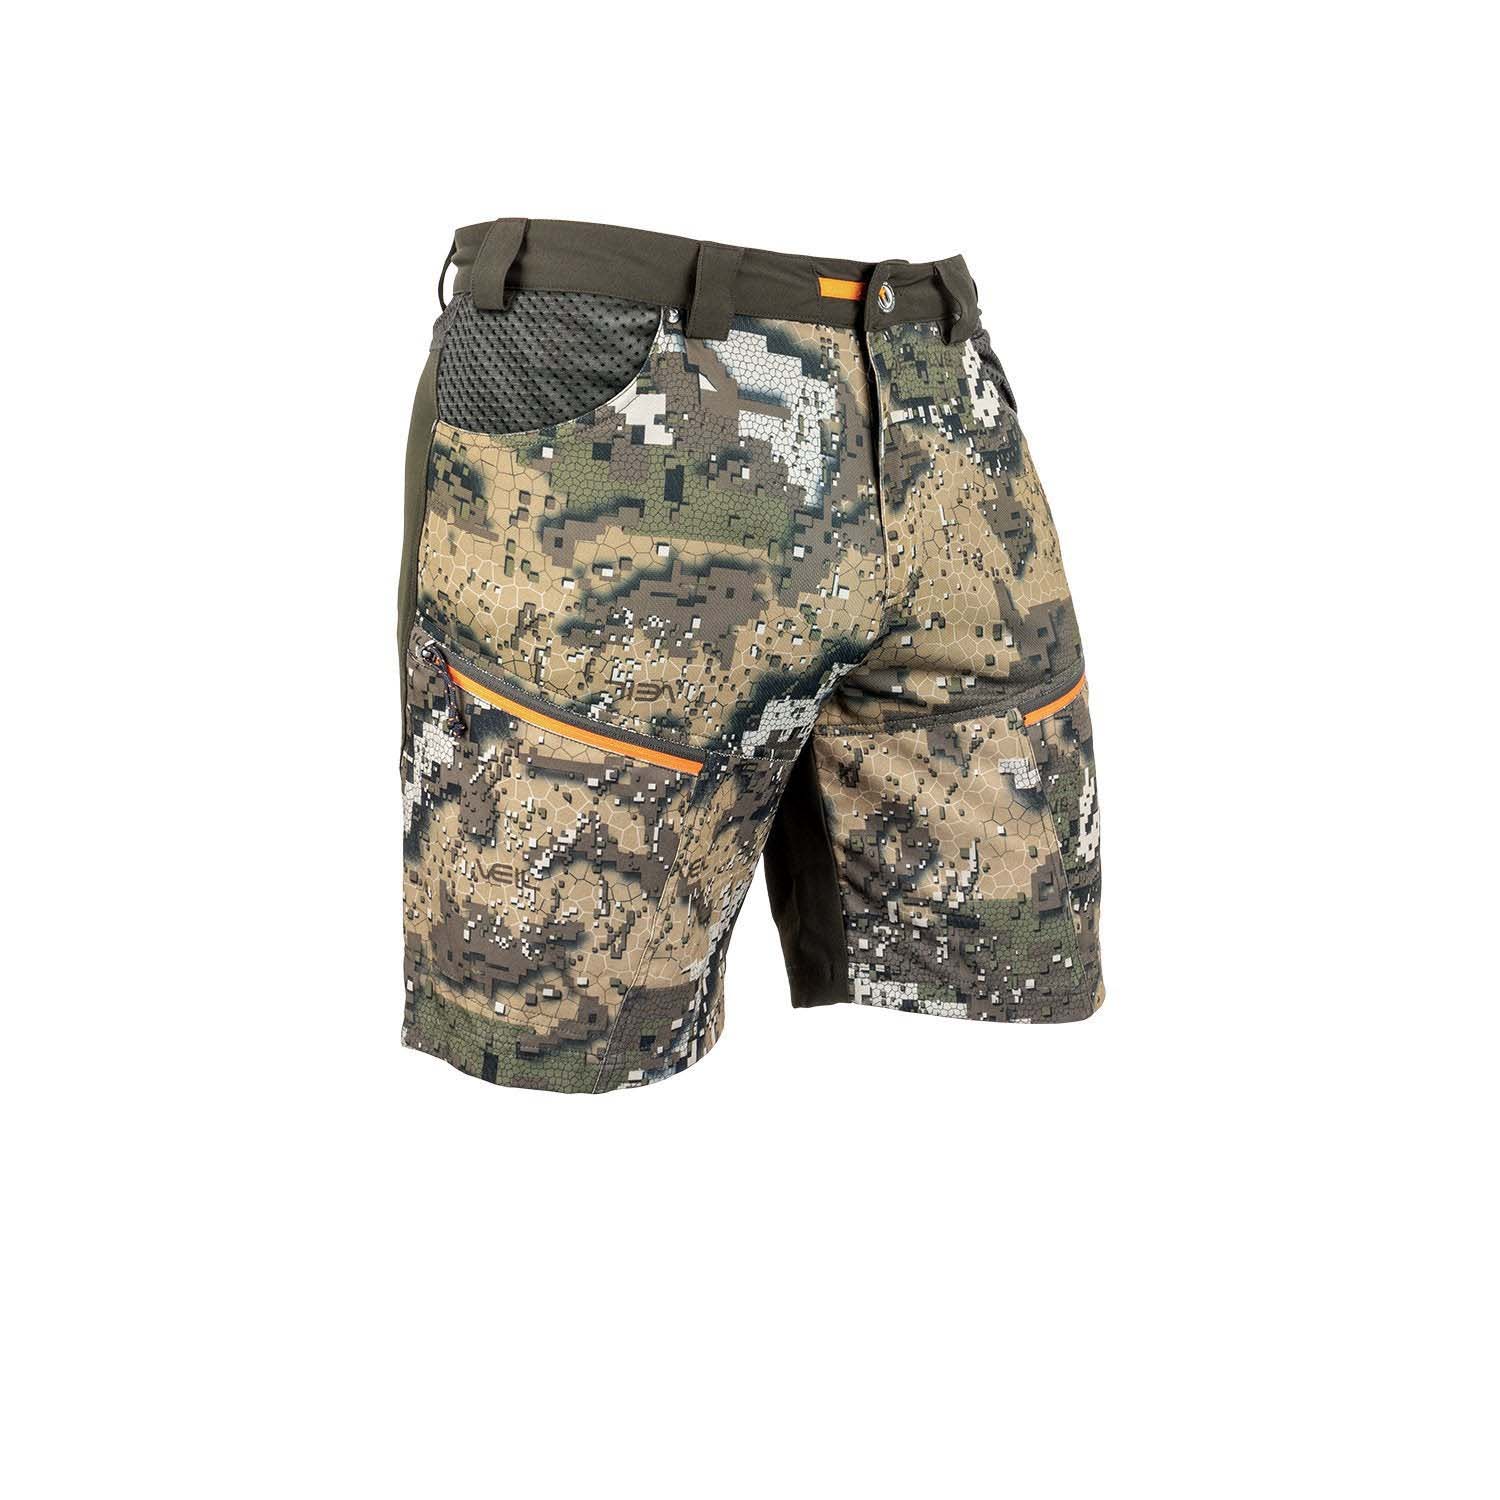 Hunters Element, Spur Shorts, Premium Technical Hunting Shorts